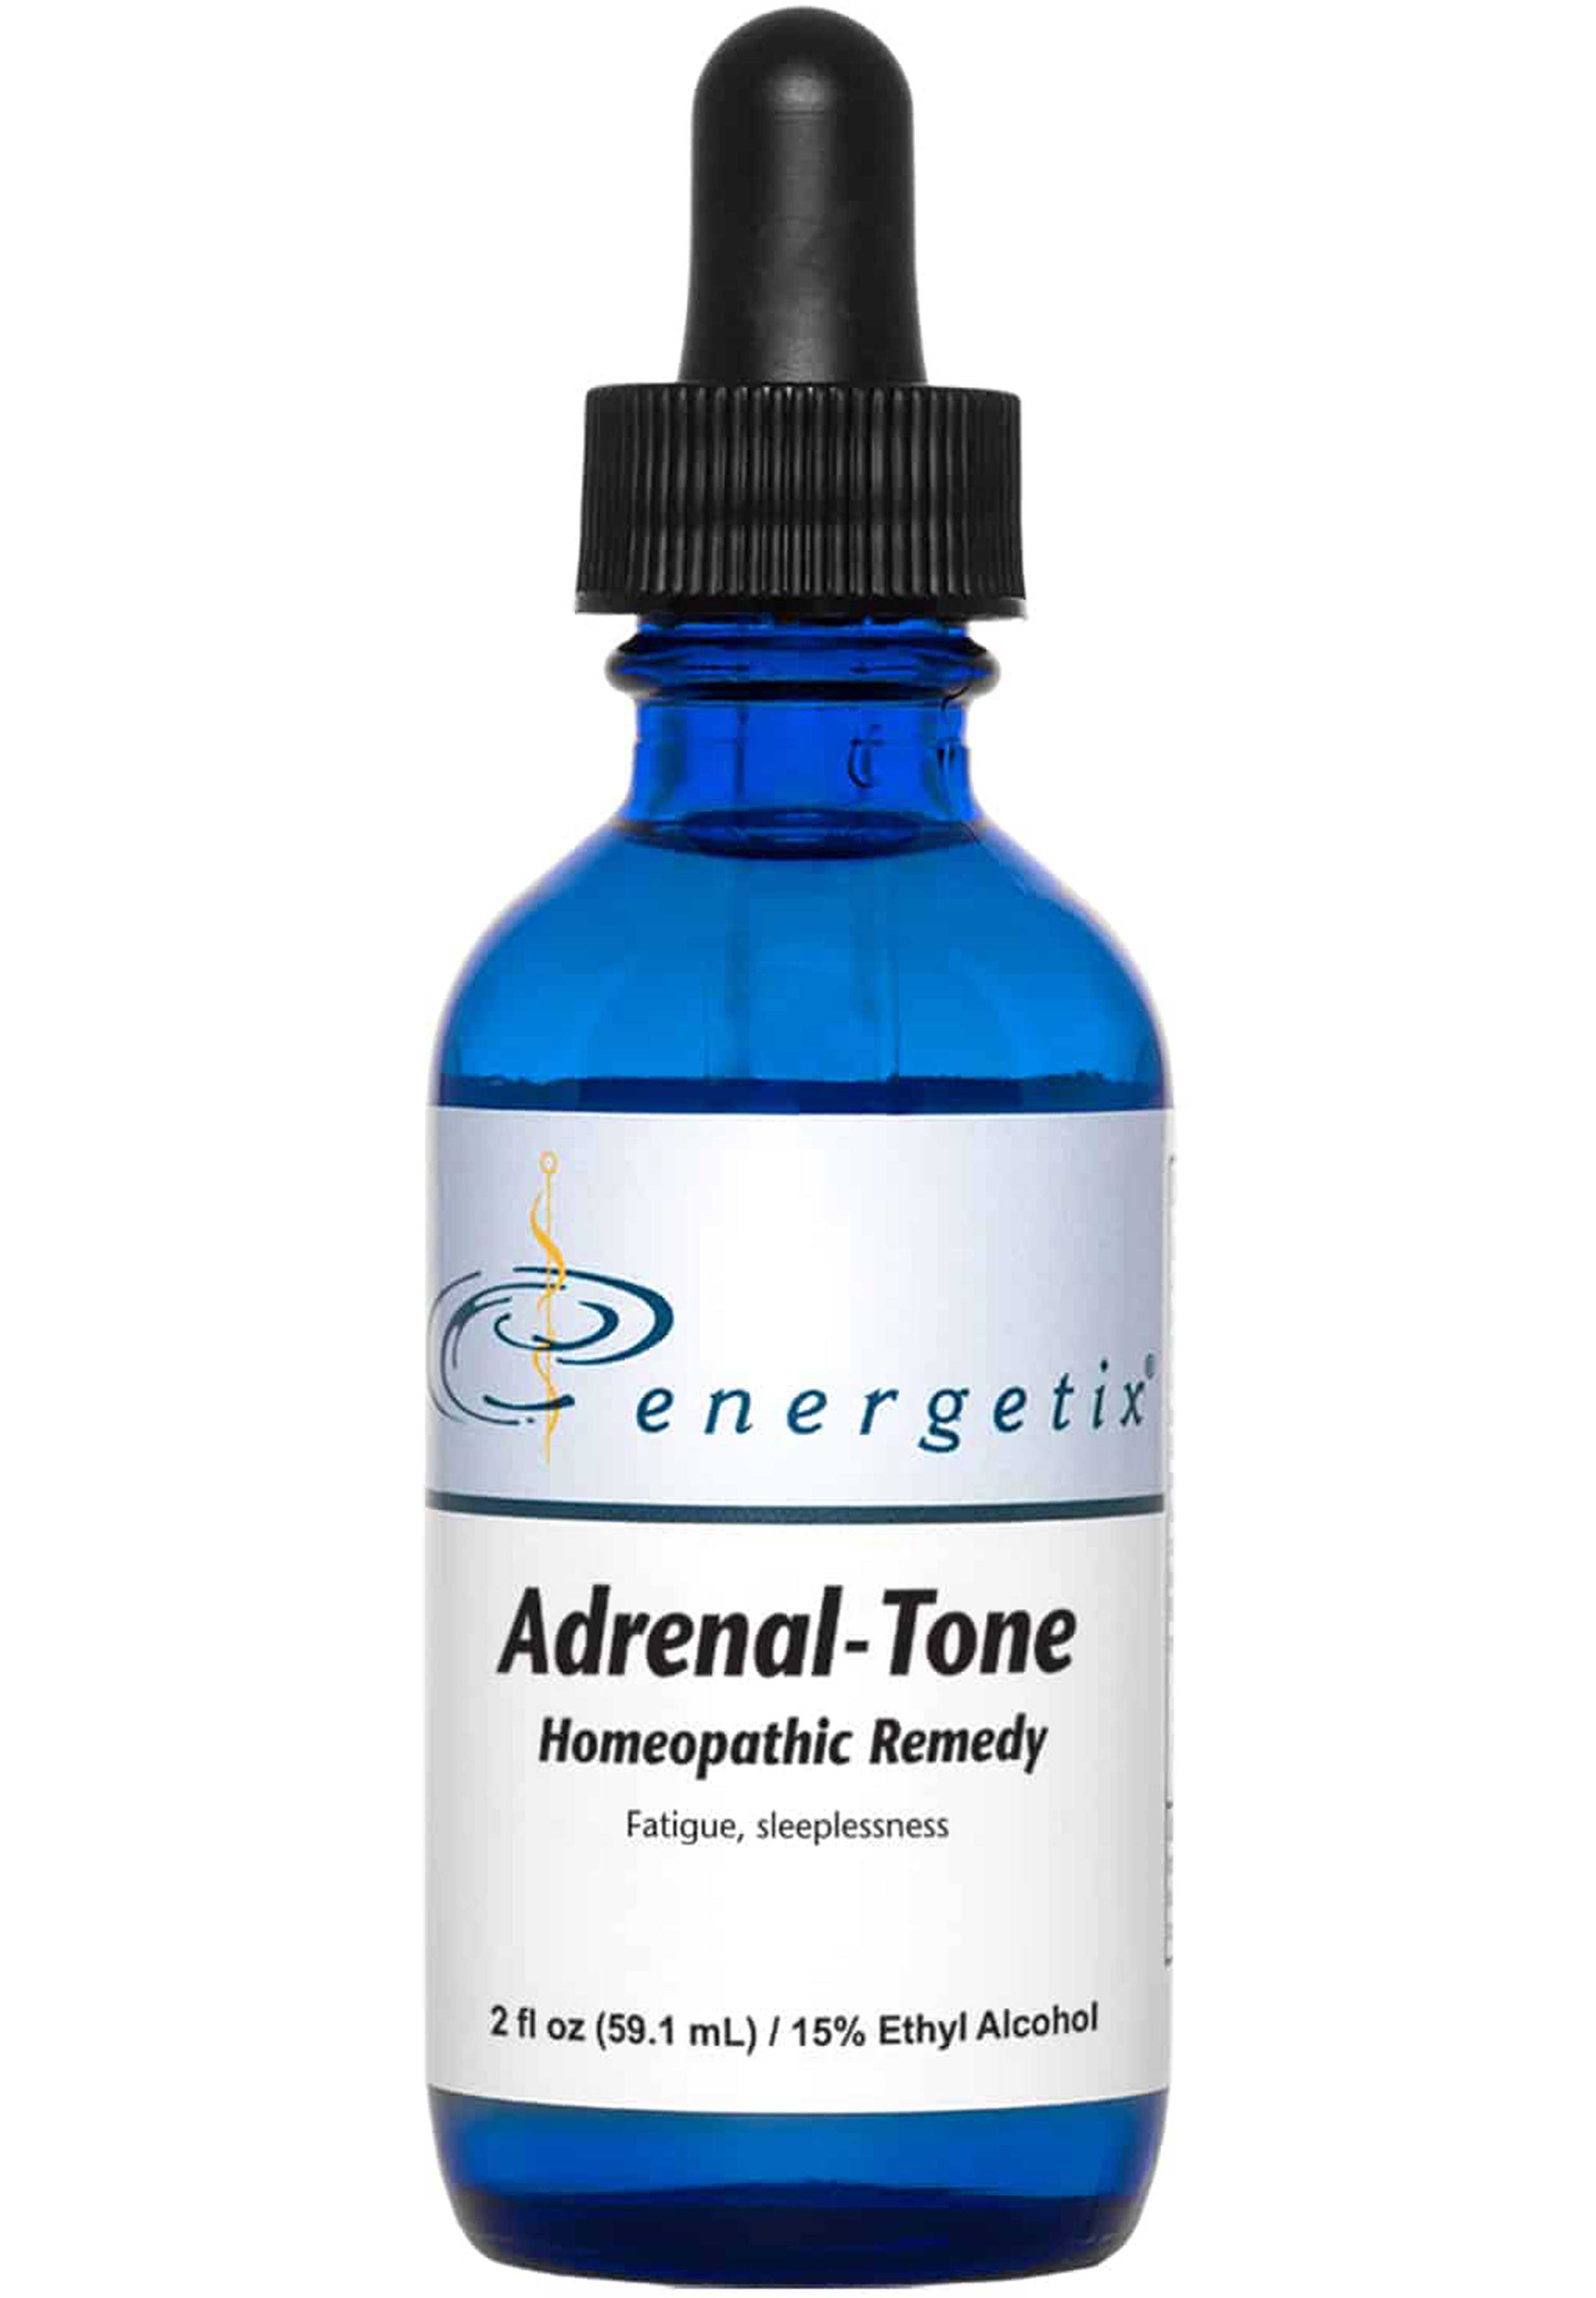 Energetix Adrenal-Tone